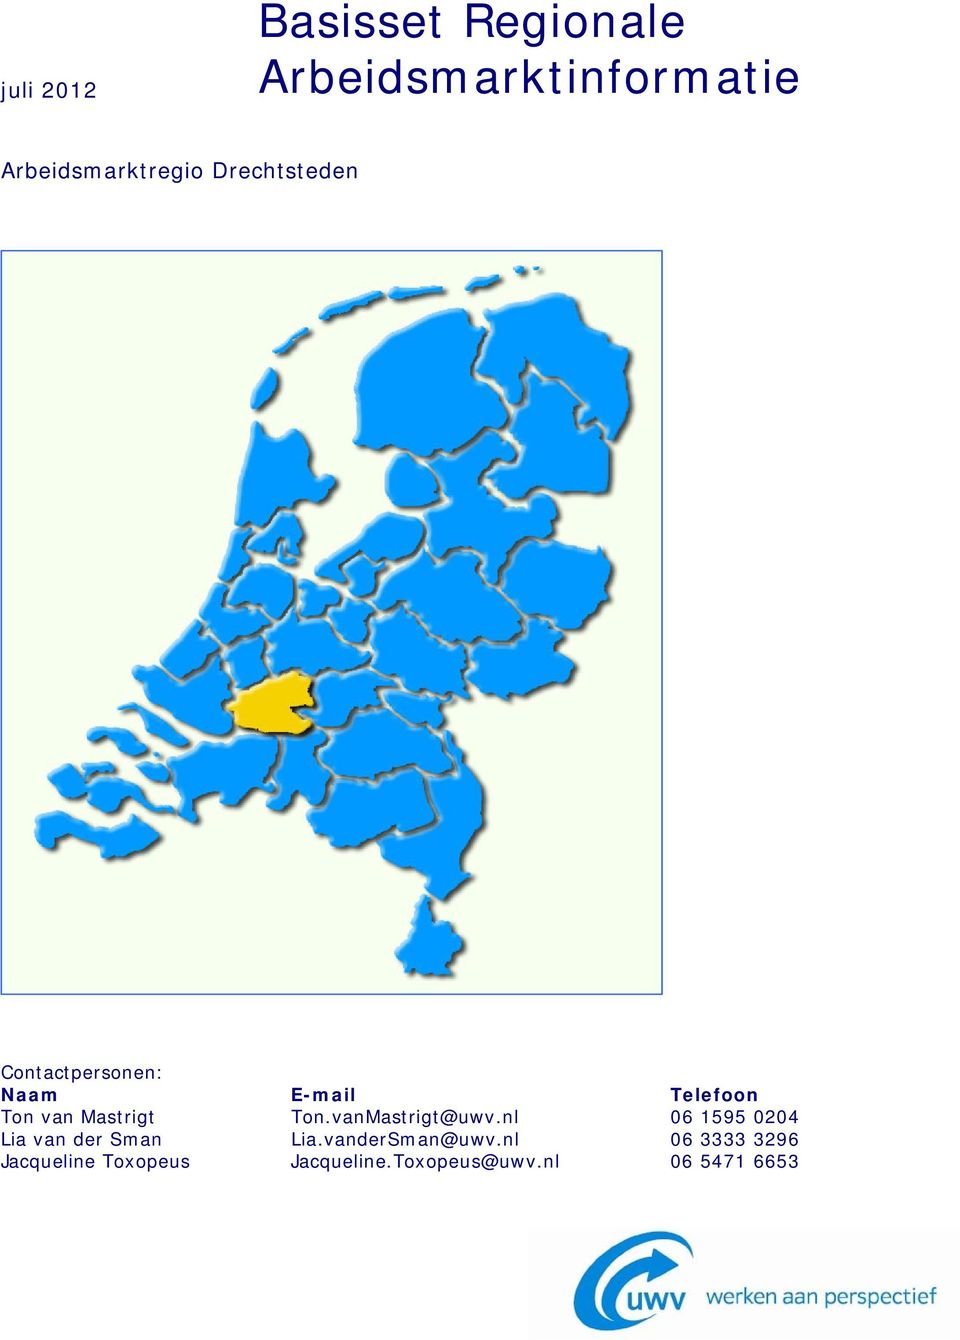 Ton.vanMastrigt@uwv.nl 6 1595 24 Lia van der Sman Lia.